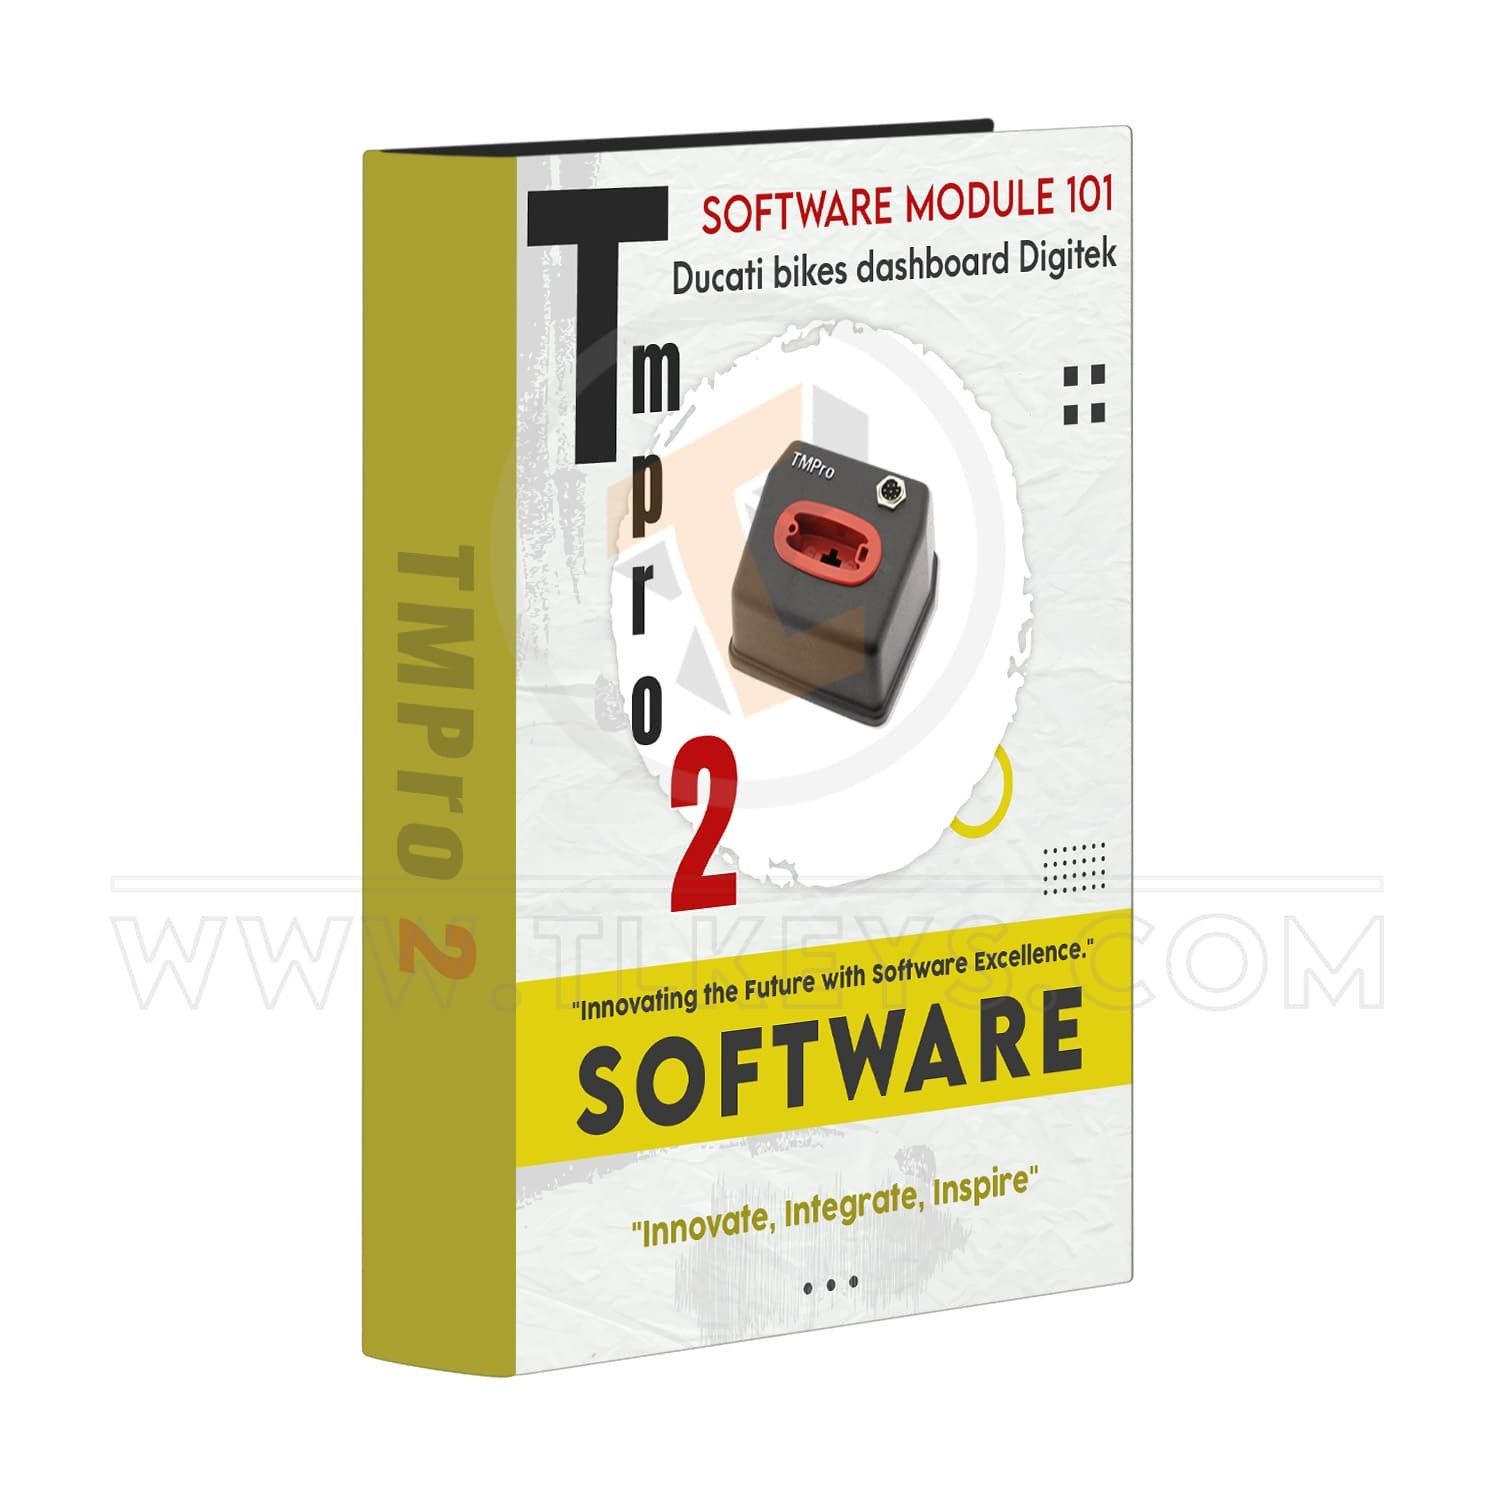 Tmpro 2 Tmpro 2 Software module 101 – Ducati bikes dashboard Digit software